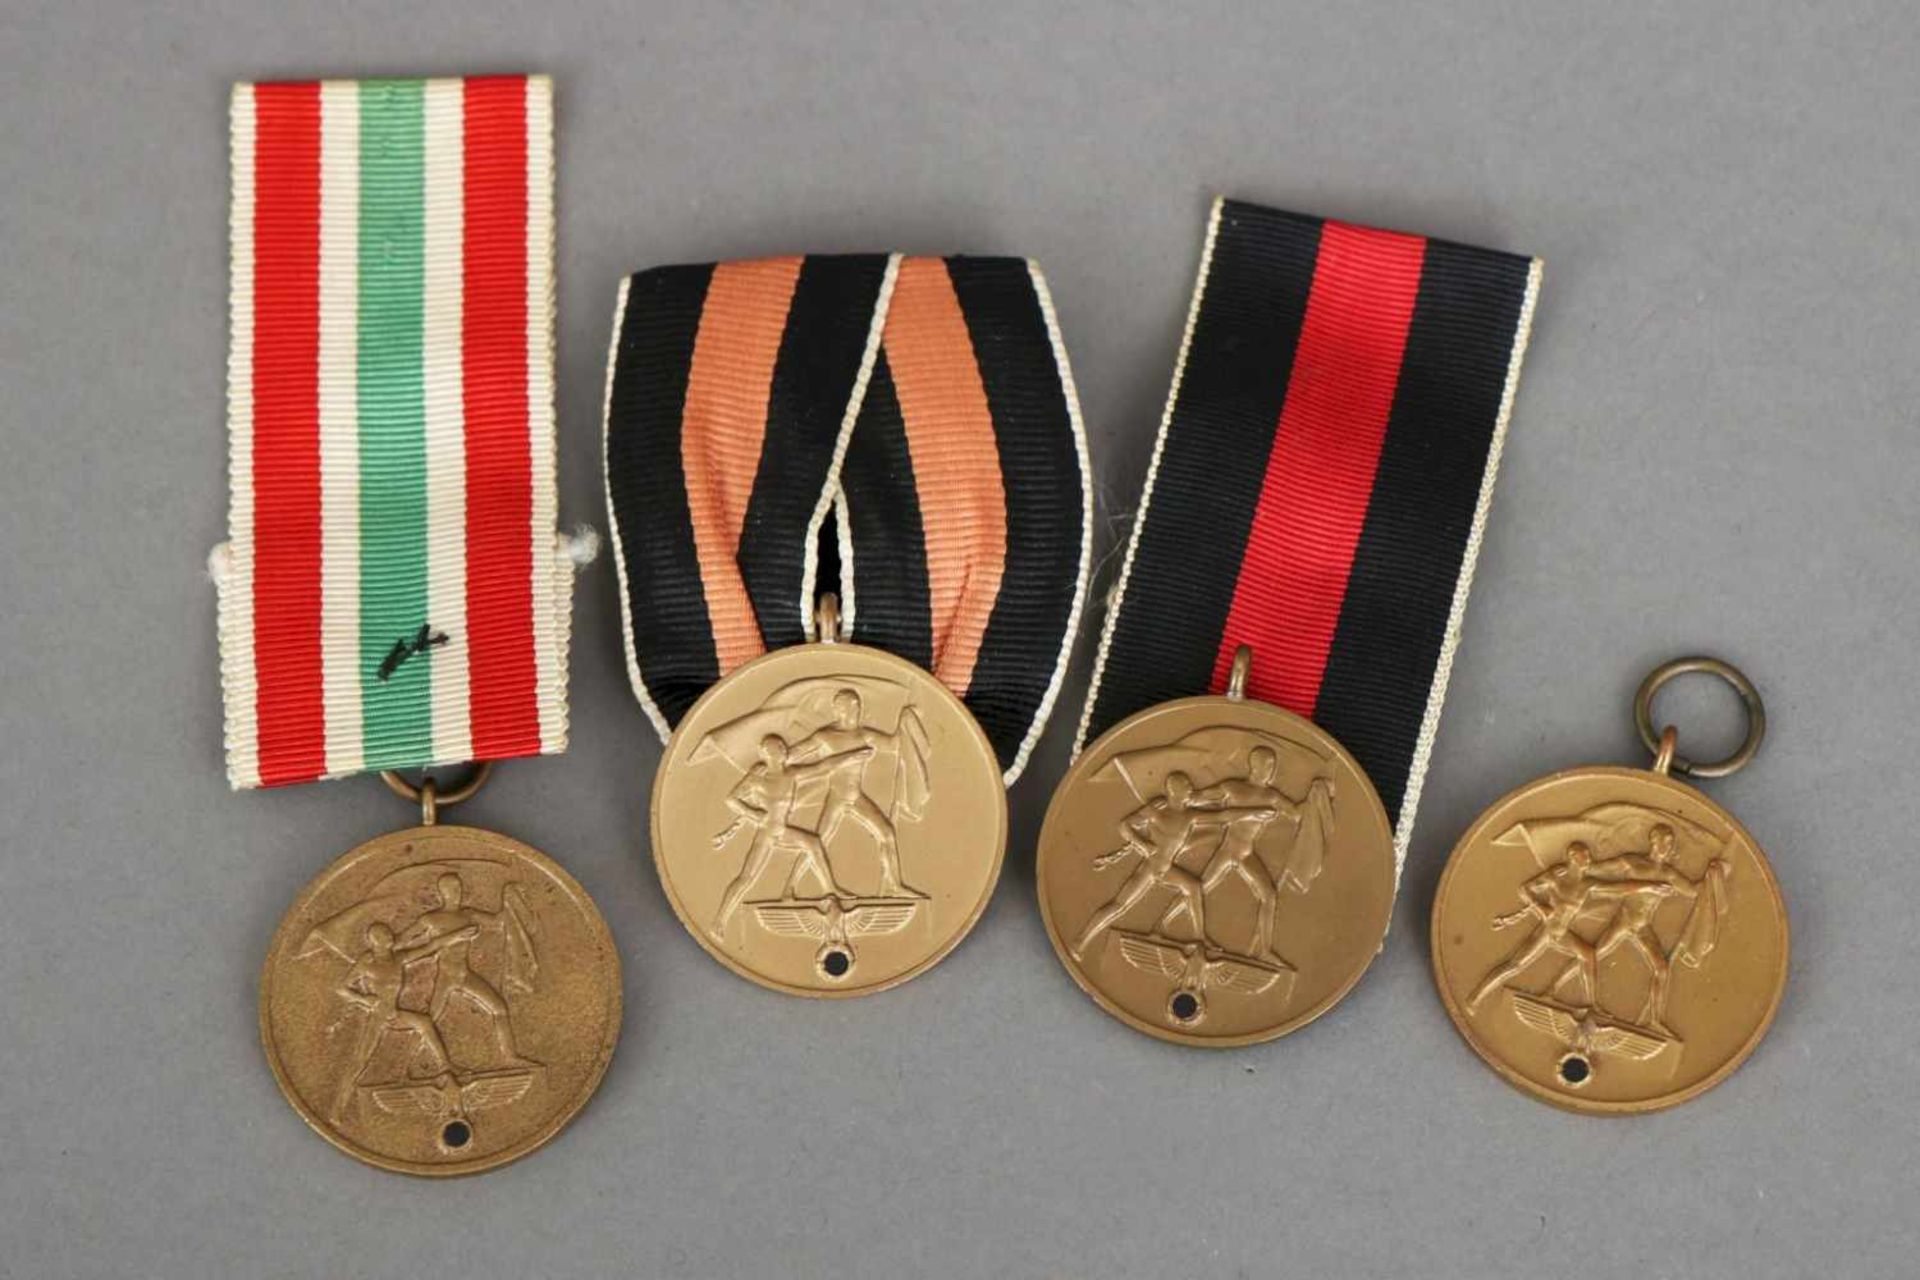 4 Medaillen zur Erinnerung an den 13. März 1938Drittes Reich, teilweise am Band